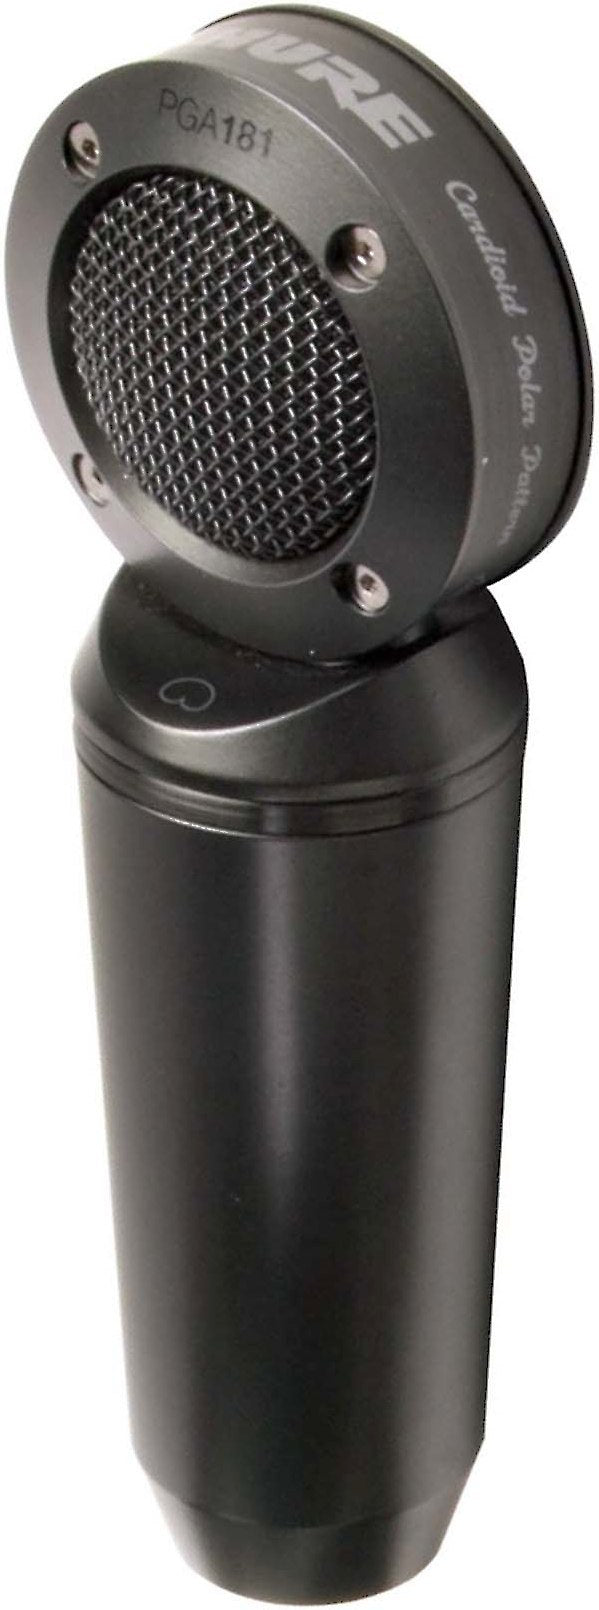 SHURE PGA181 - Side-Address Cardioid Condenser Microphone